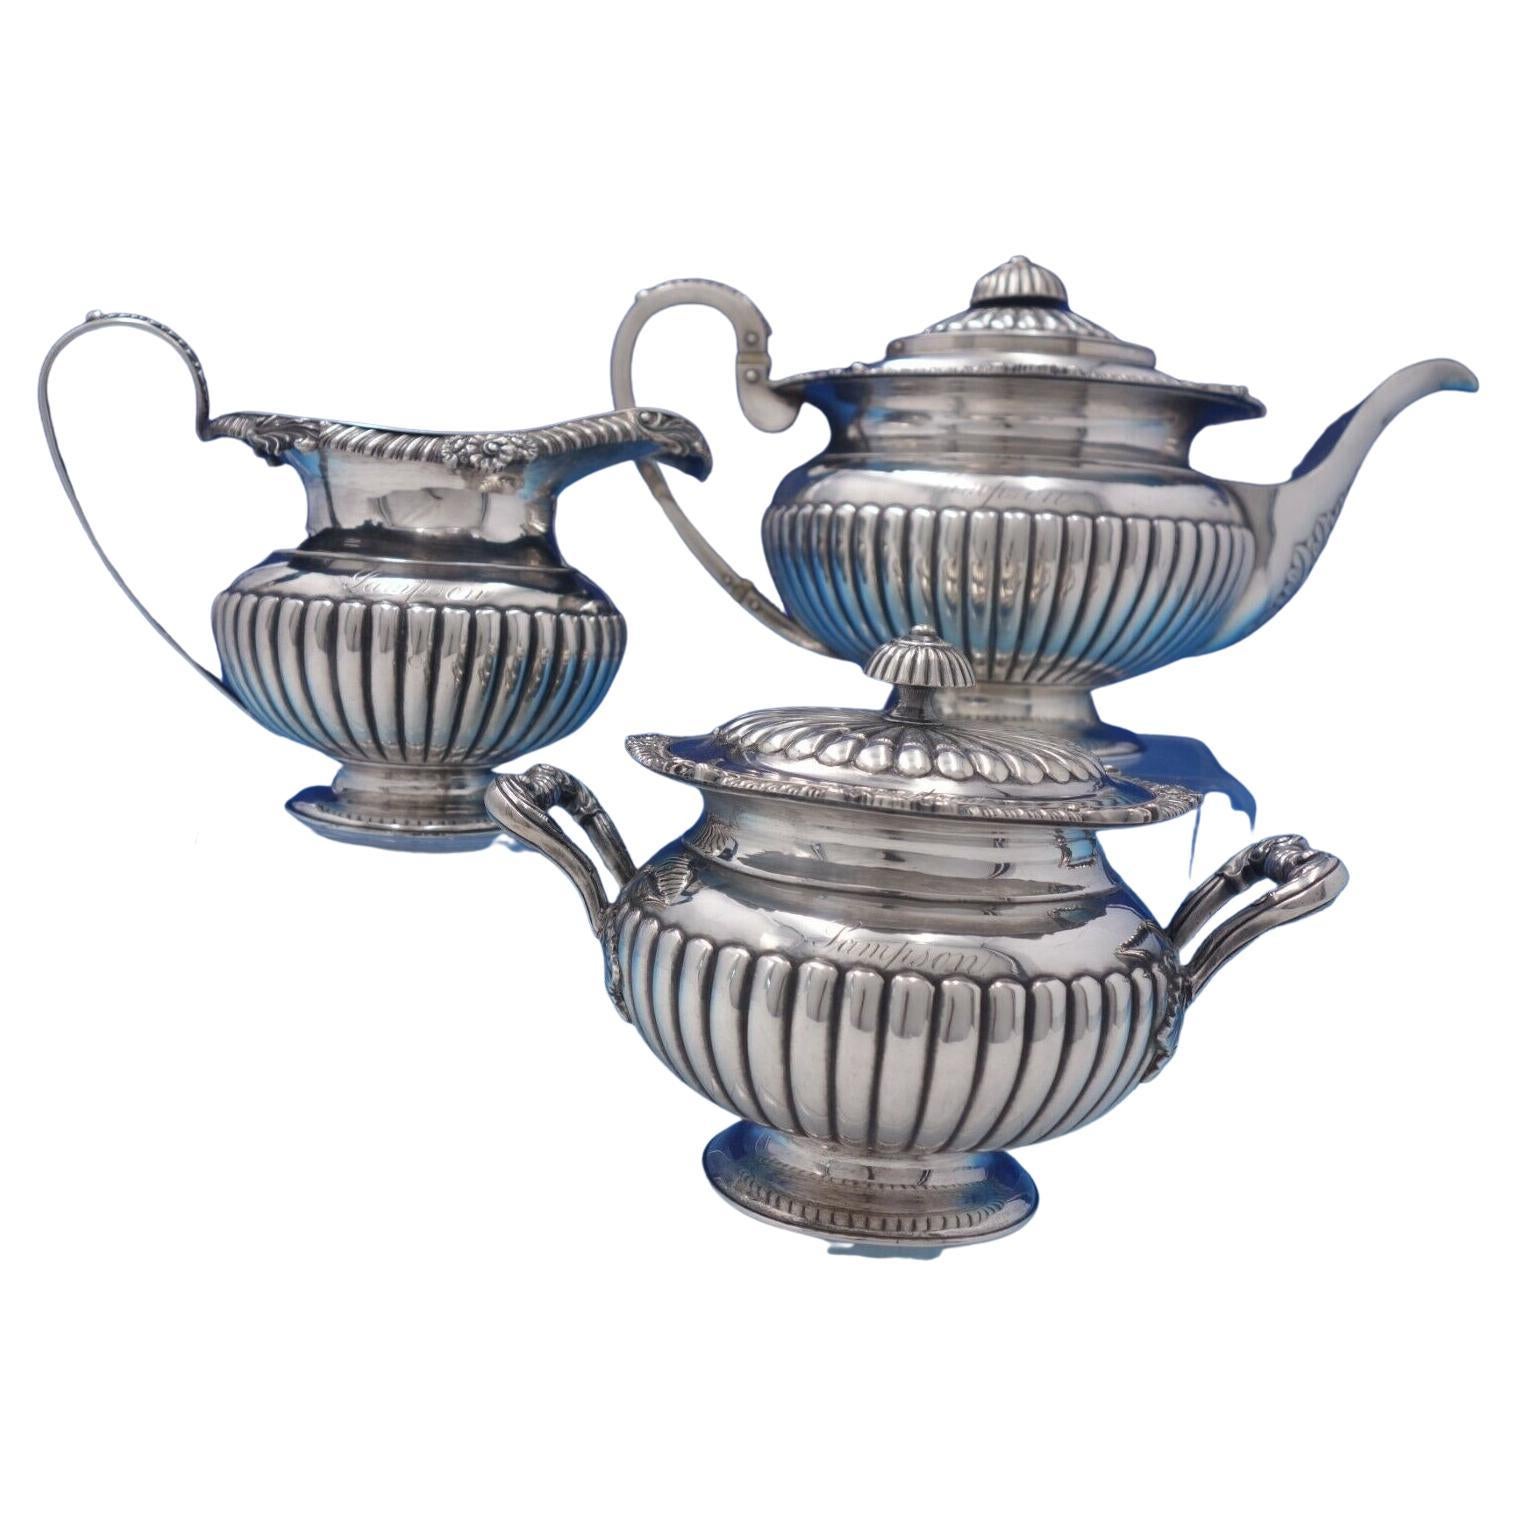 Wong Shing Chinese Export Sterling Silver Tea Set 3pc c.1840-1870 '#6462'